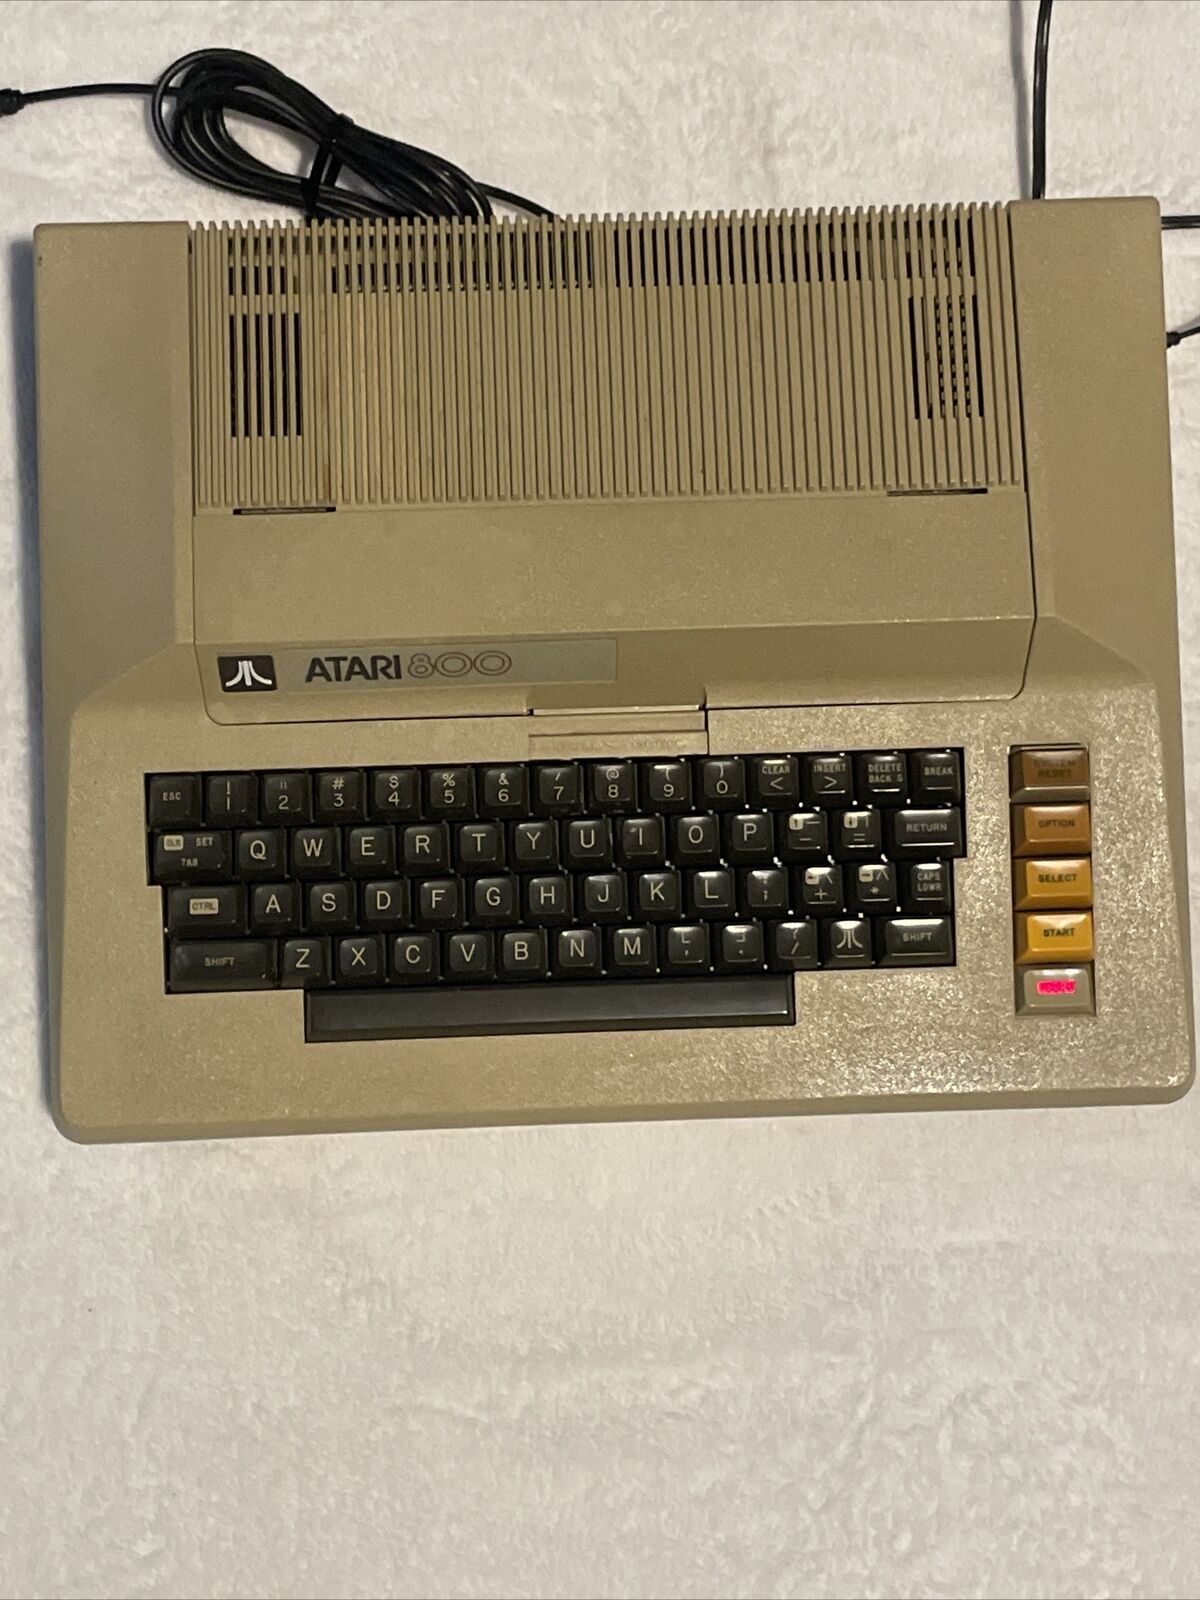 Atari 800 Computer System Console/Power Supply. Untested. Please See Description